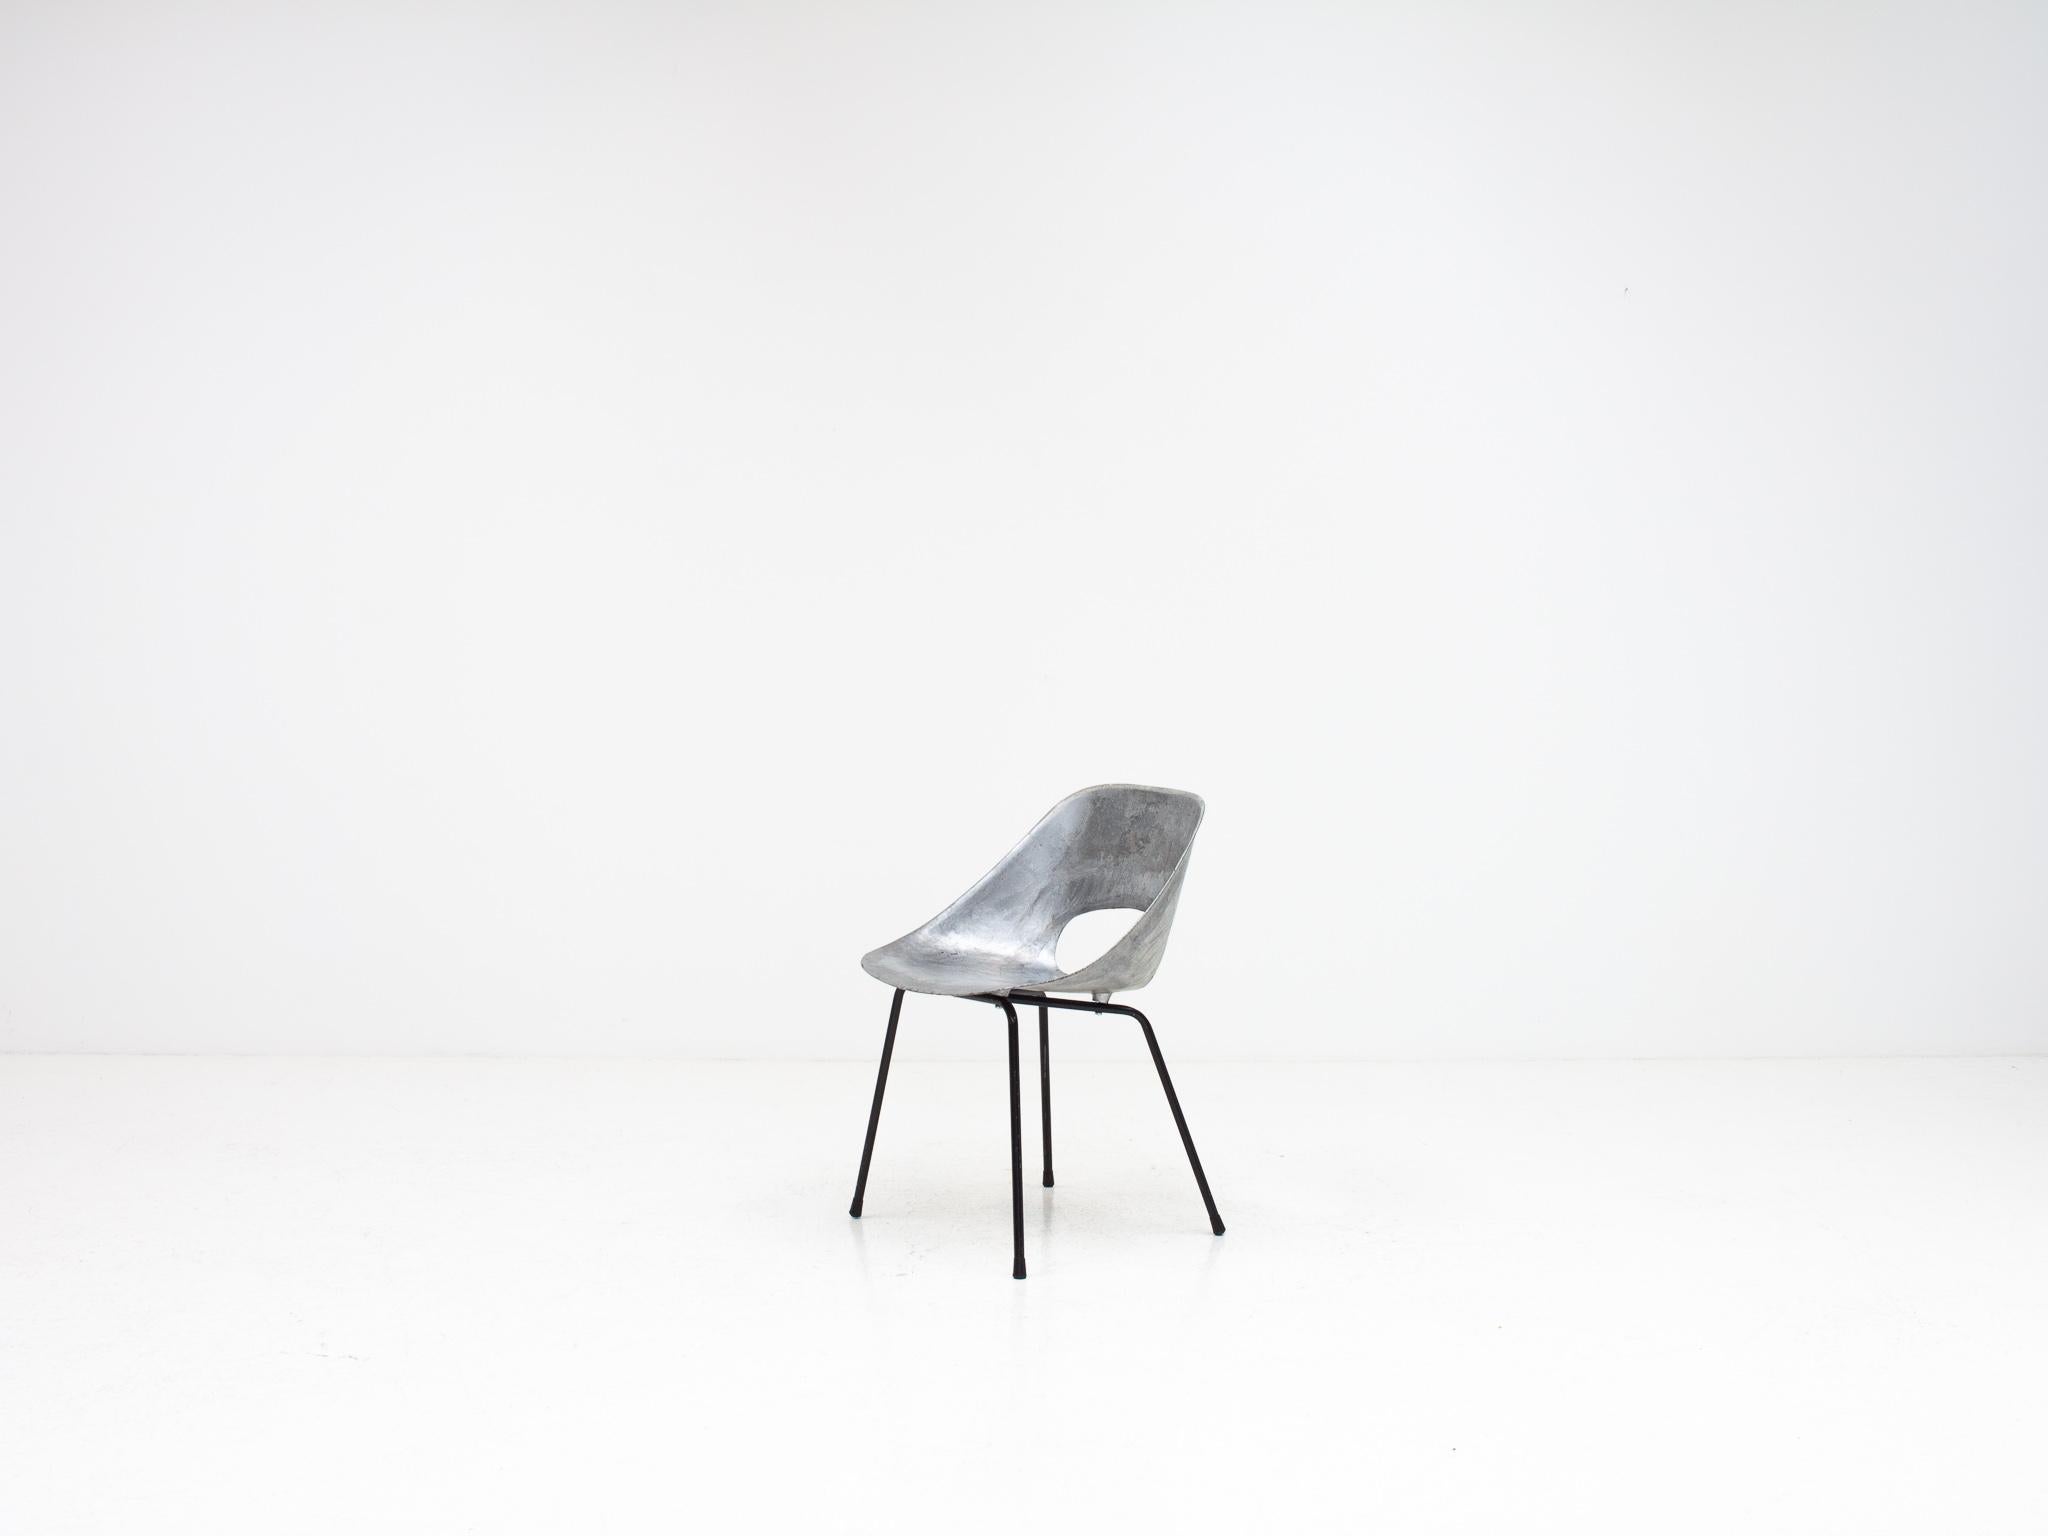 Pierre Guariche Tulip Chair, Cast Aluminum, Steiner Meubles, Paris, 1954 In Good Condition In London Road, Baldock, Hertfordshire